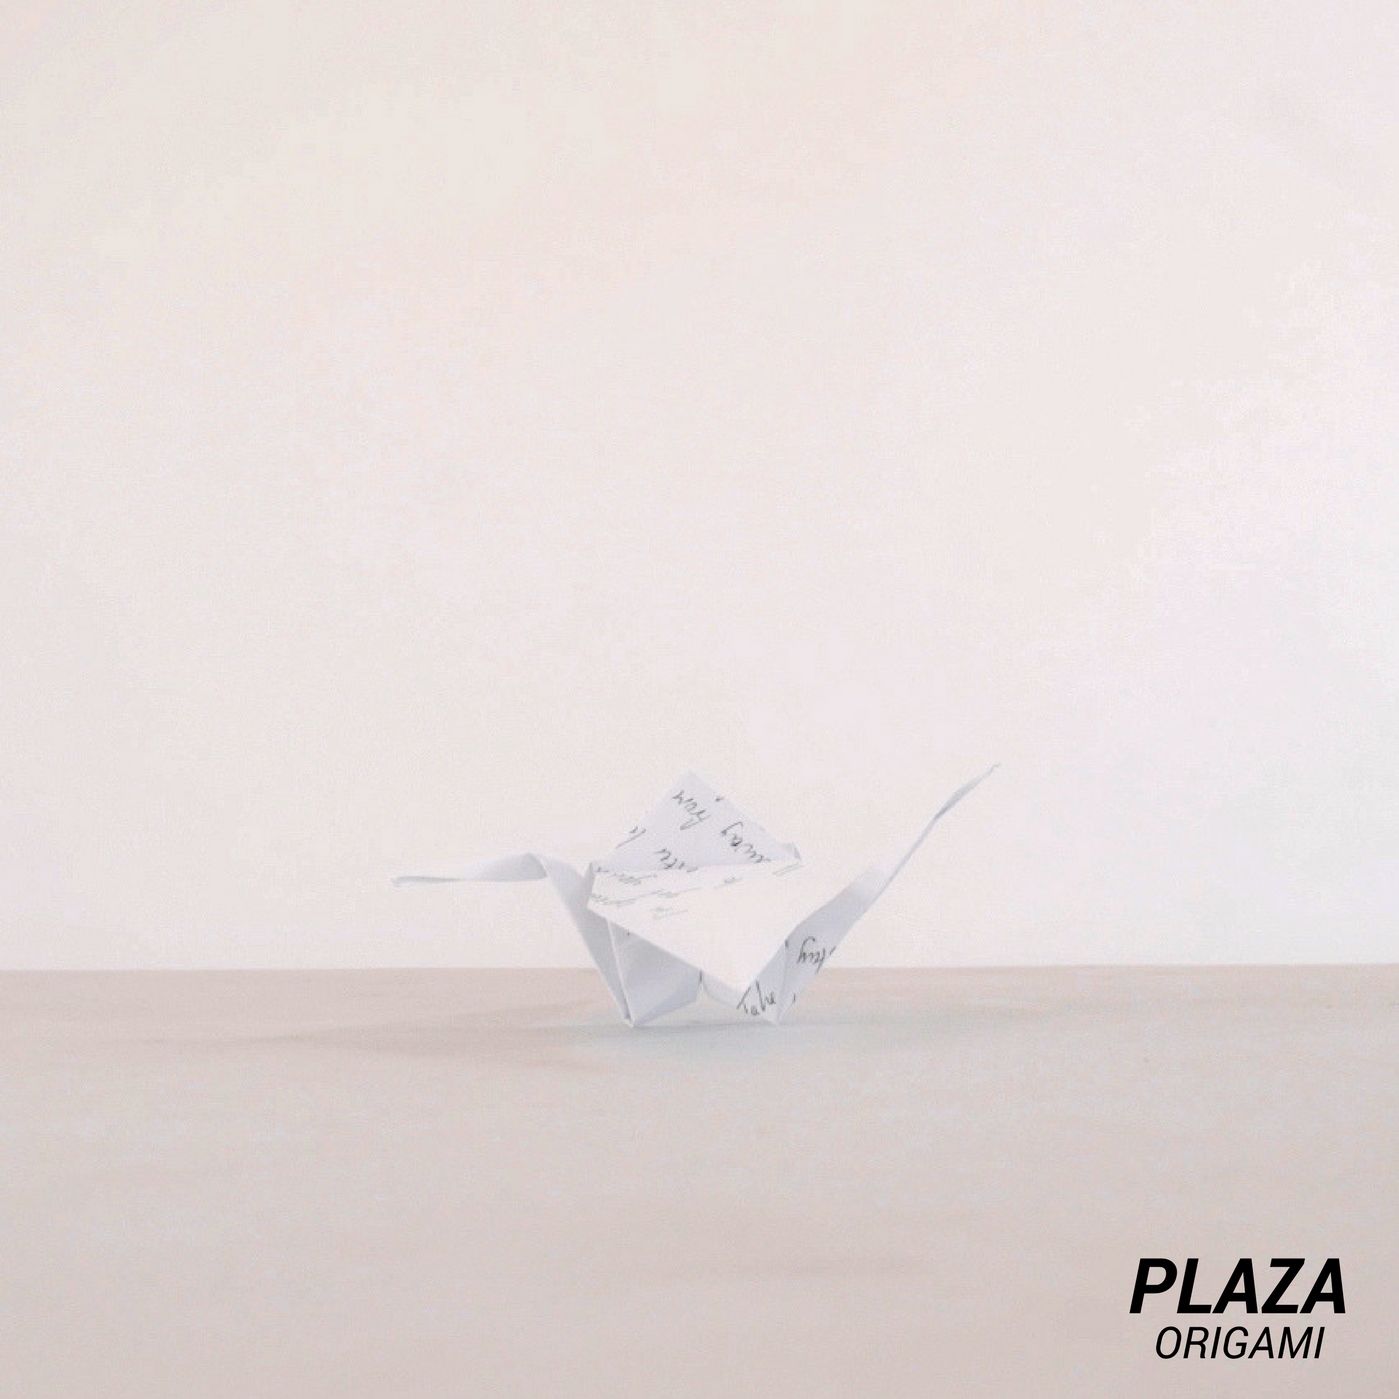 PLAZA – “Origami”